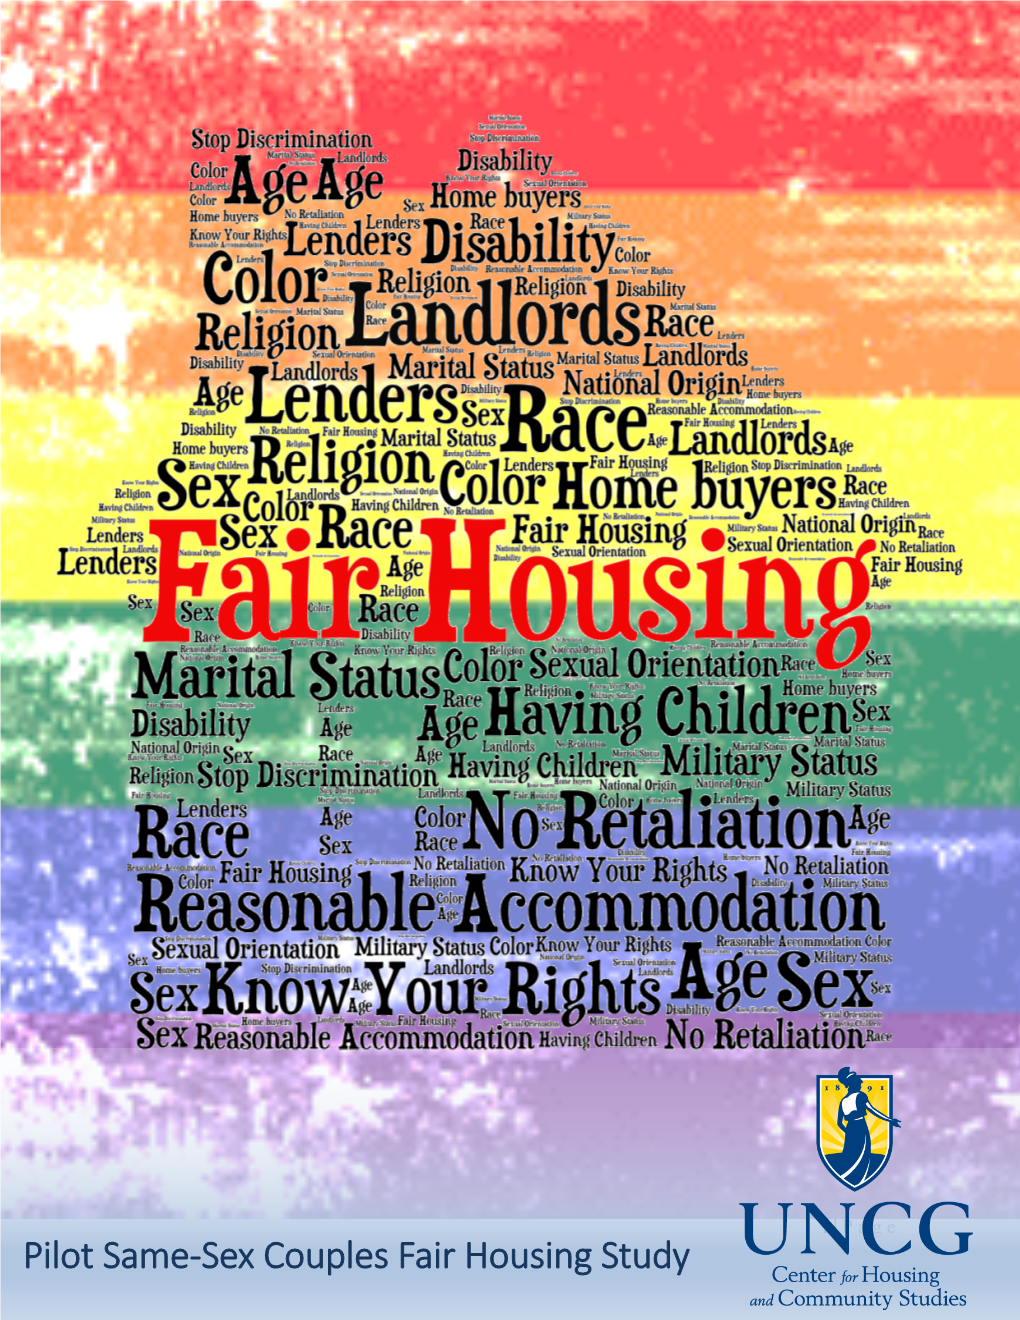 Pilot Same-Sex Couples Fair Housing Study UNCG Center for Housing and Community Studies